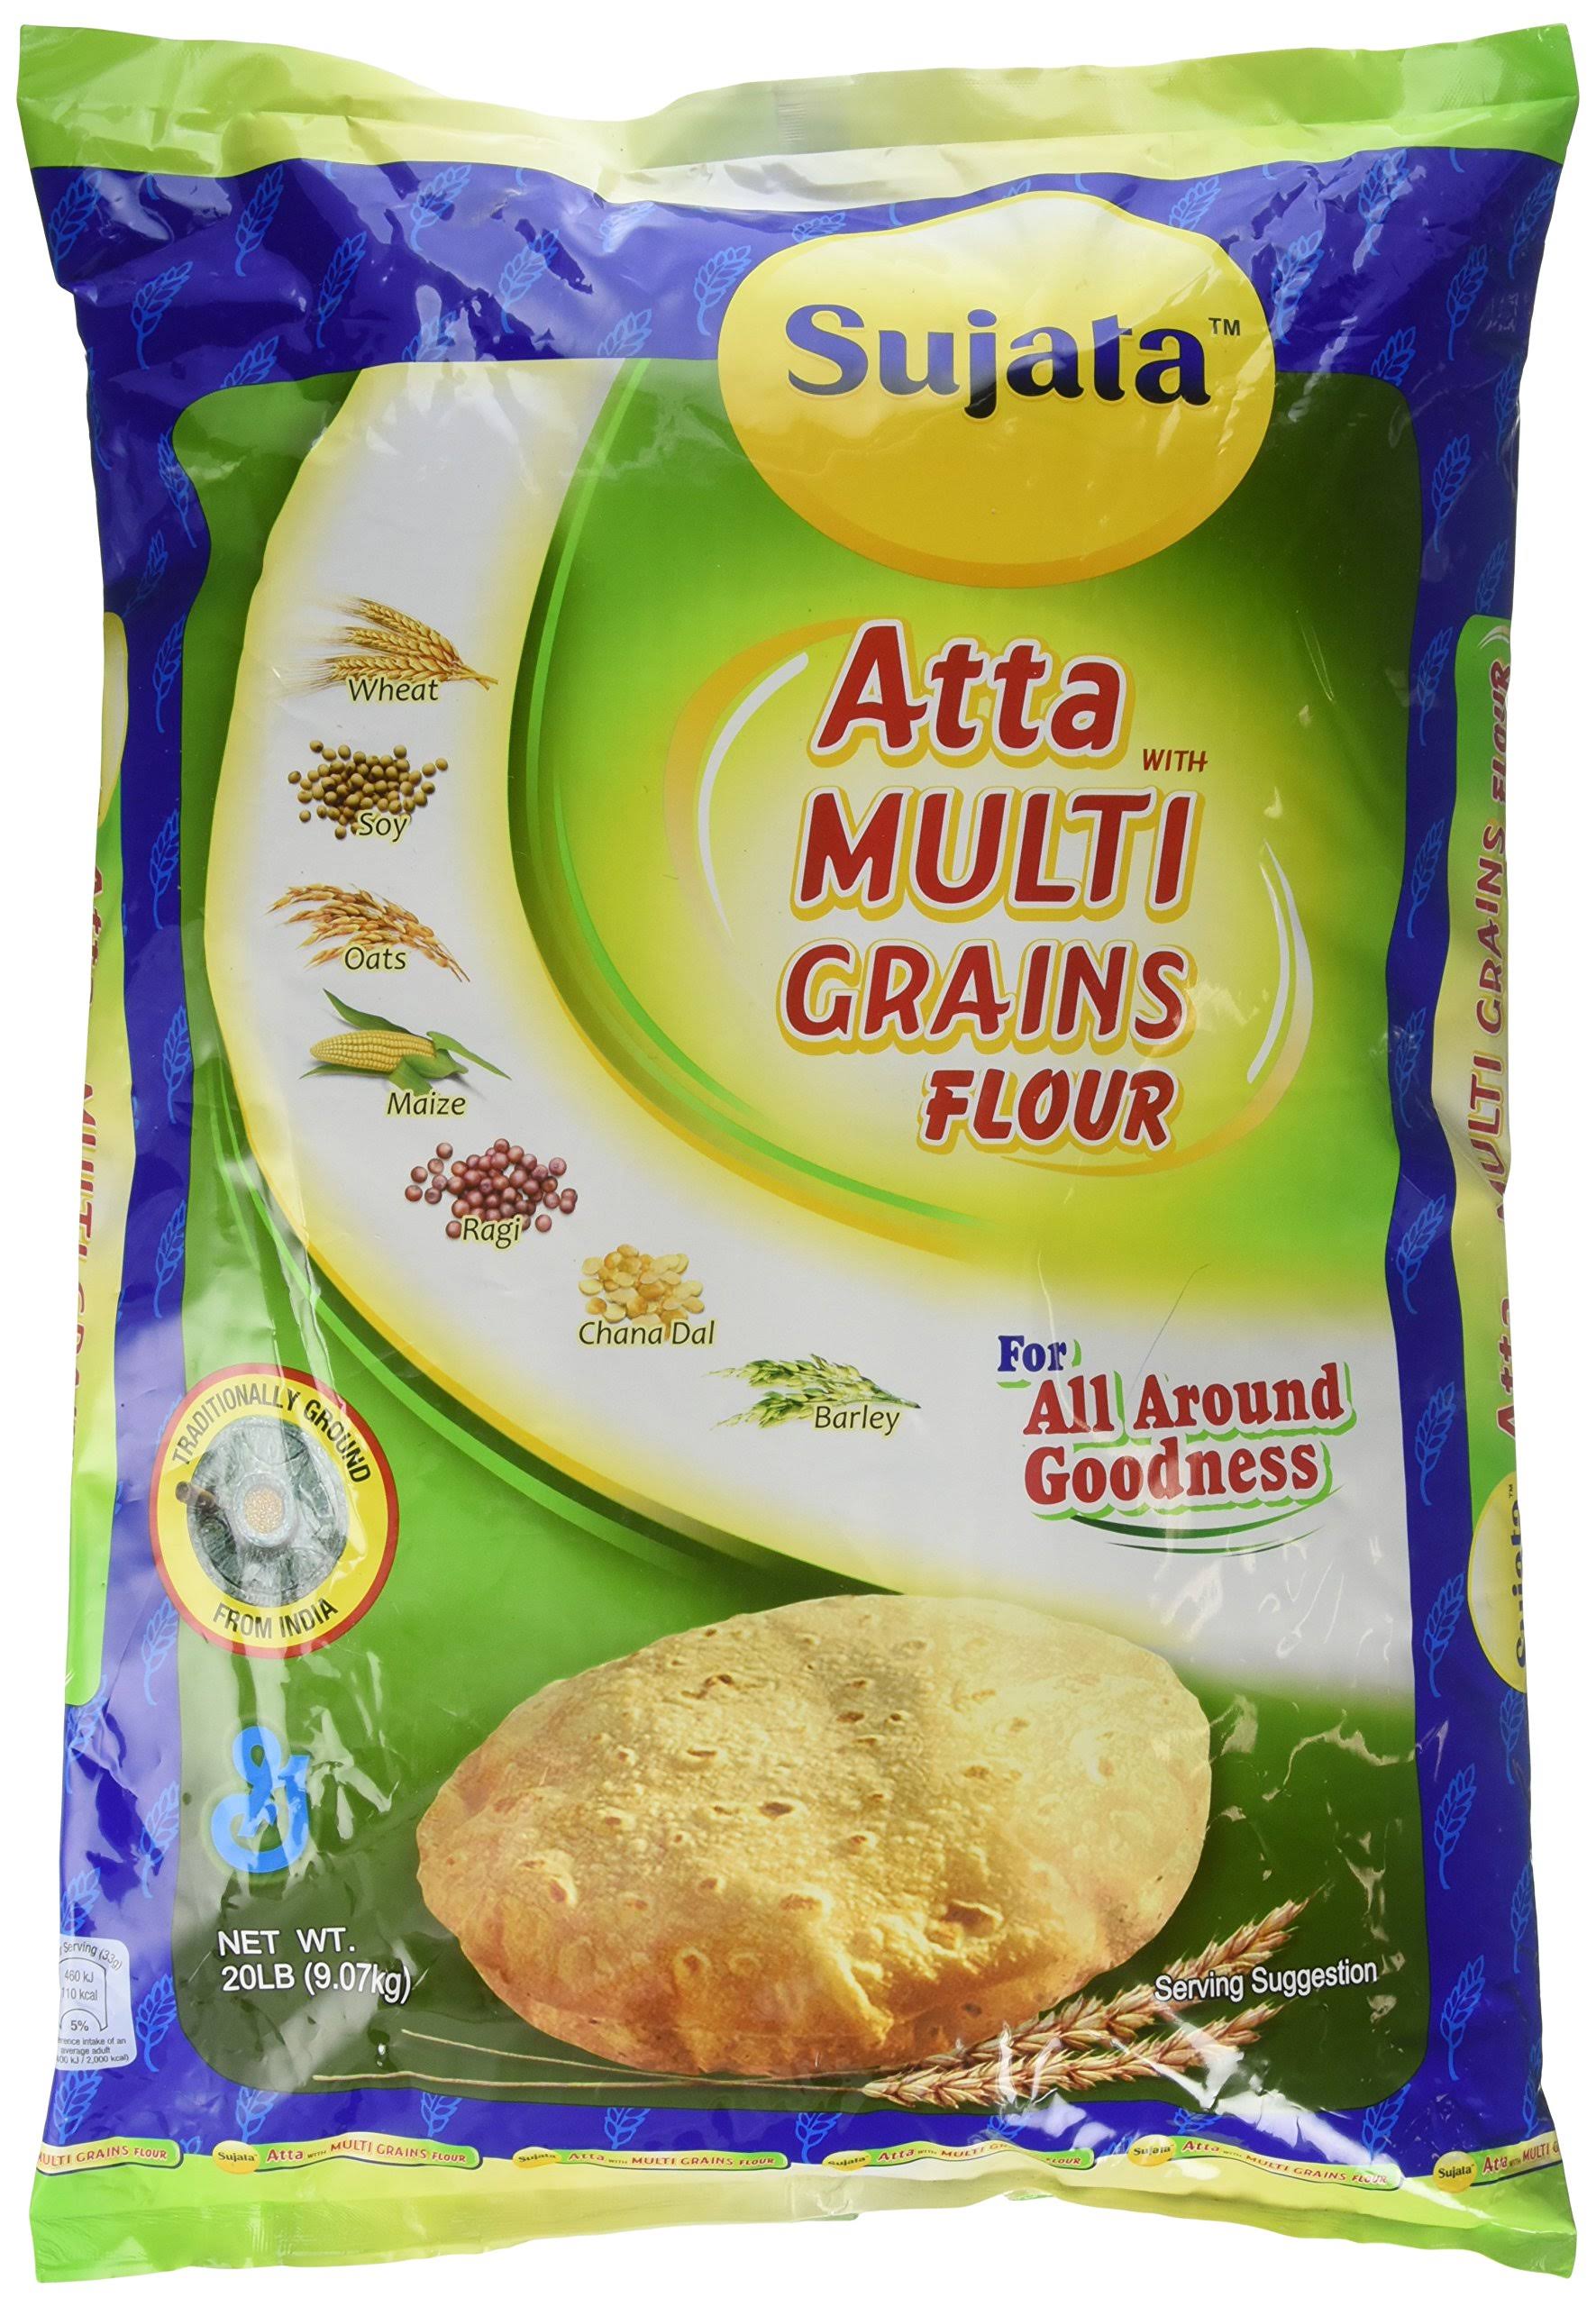 Sujata Atta - Multi Grains Flour 20lb